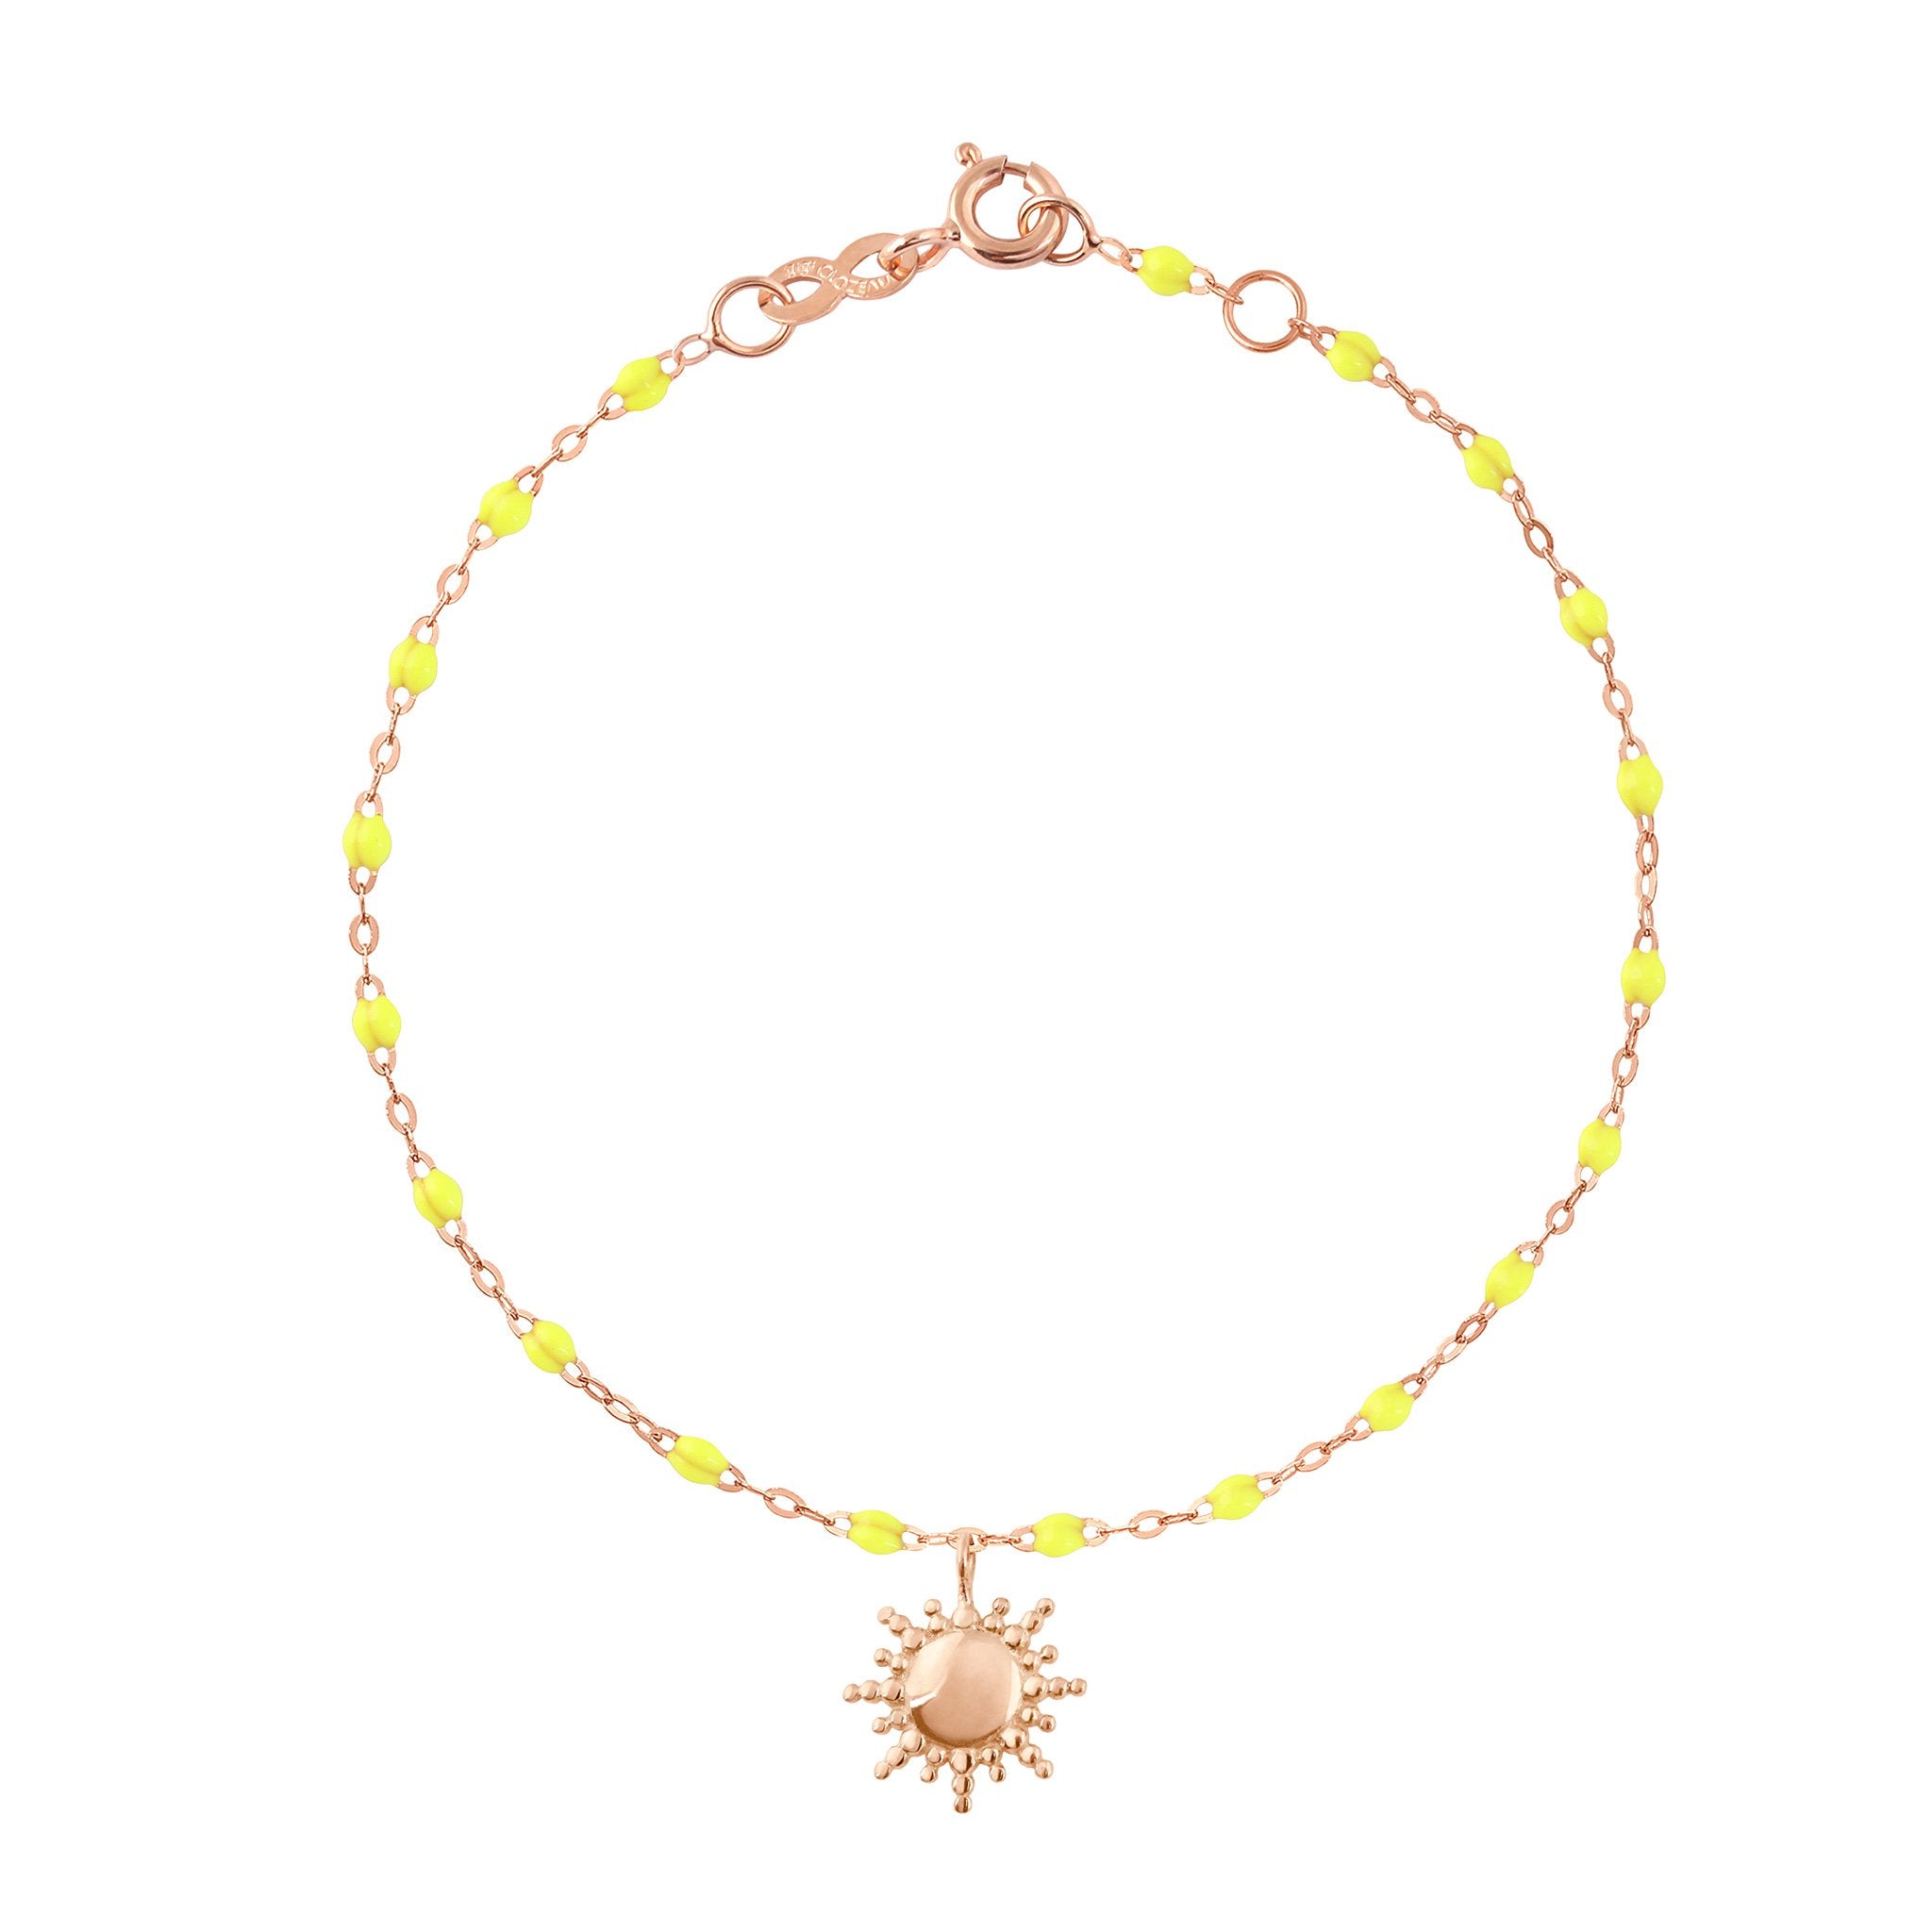 Bracelet jaune fluo Soleil, or rose, 17 cm pirate Référence :  b3so001r1817xx -1